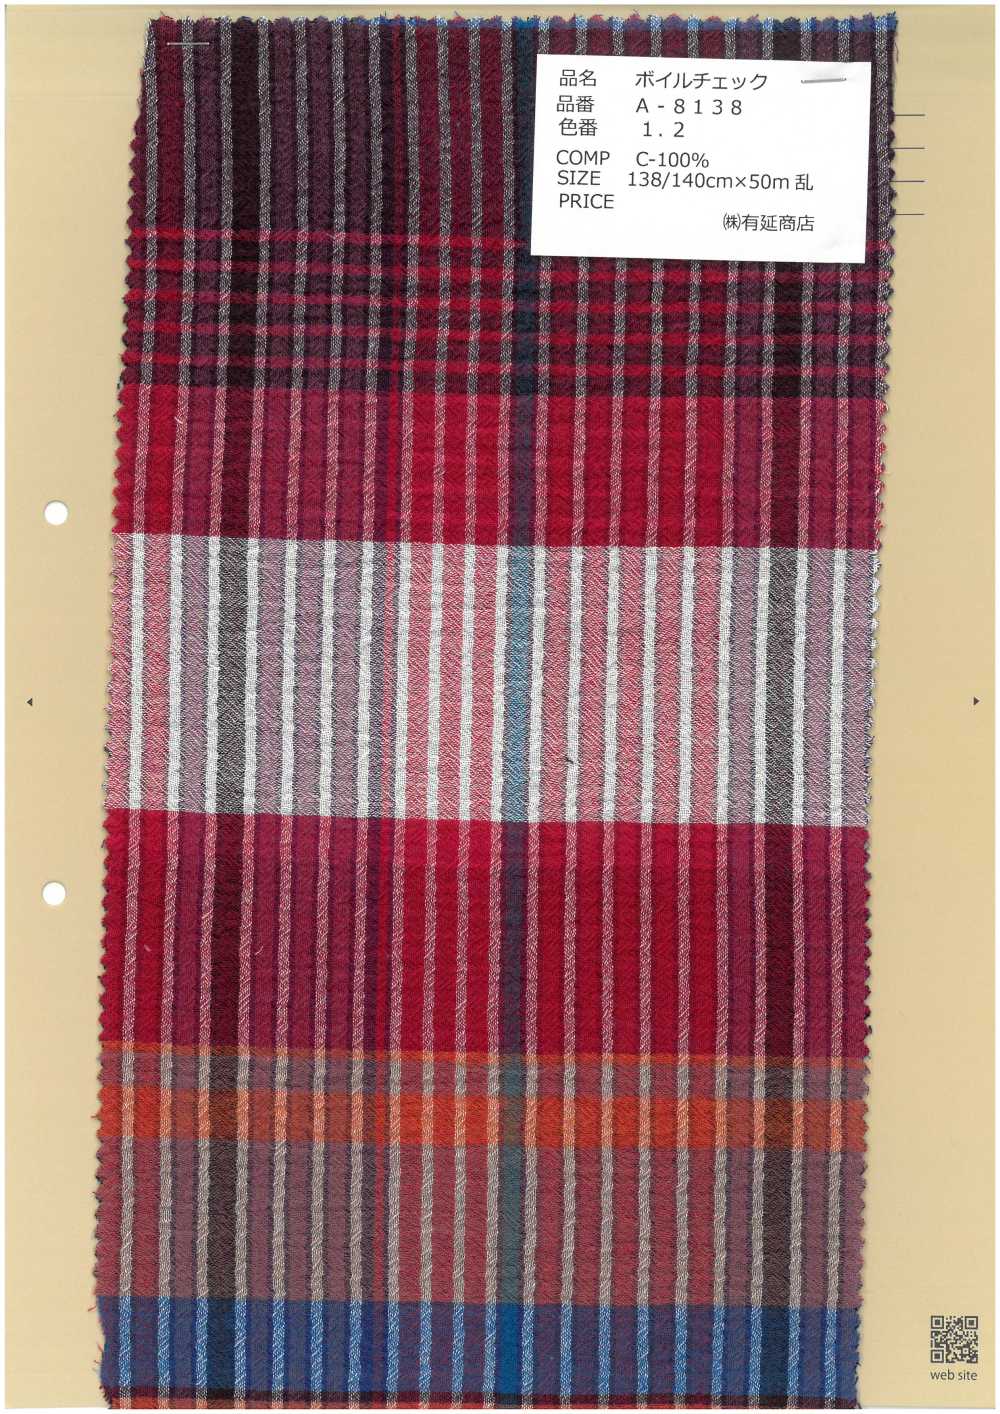 A-8138 Voile-Karo[Textilgewebe] ARINOBE CO., LTD.